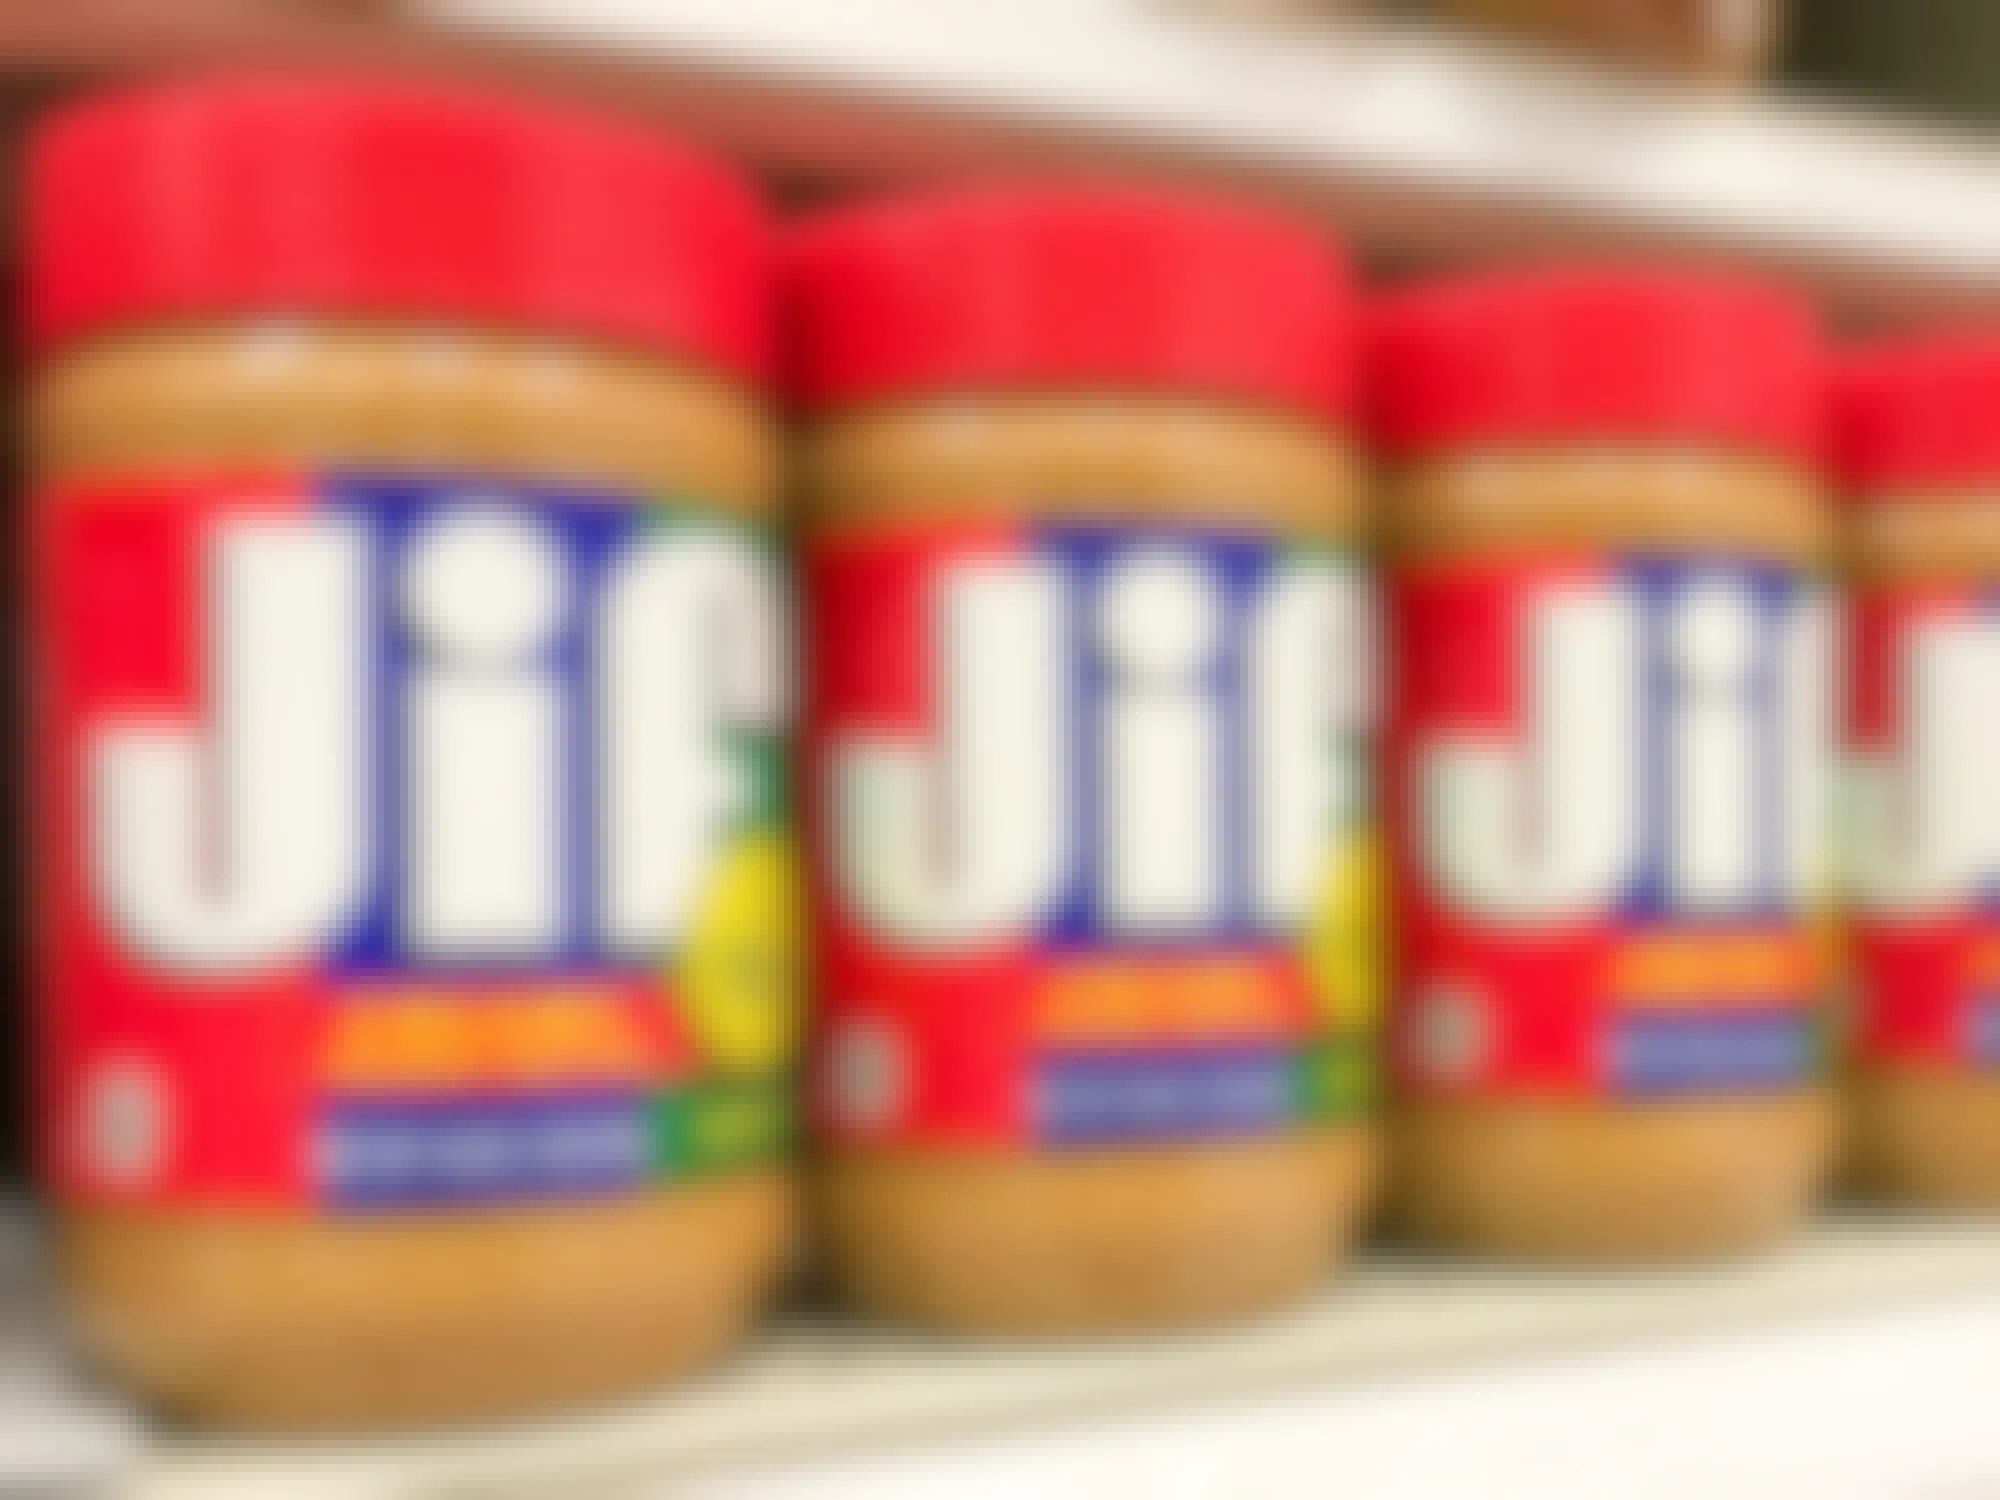 Peanut butter stocked on a store shelf